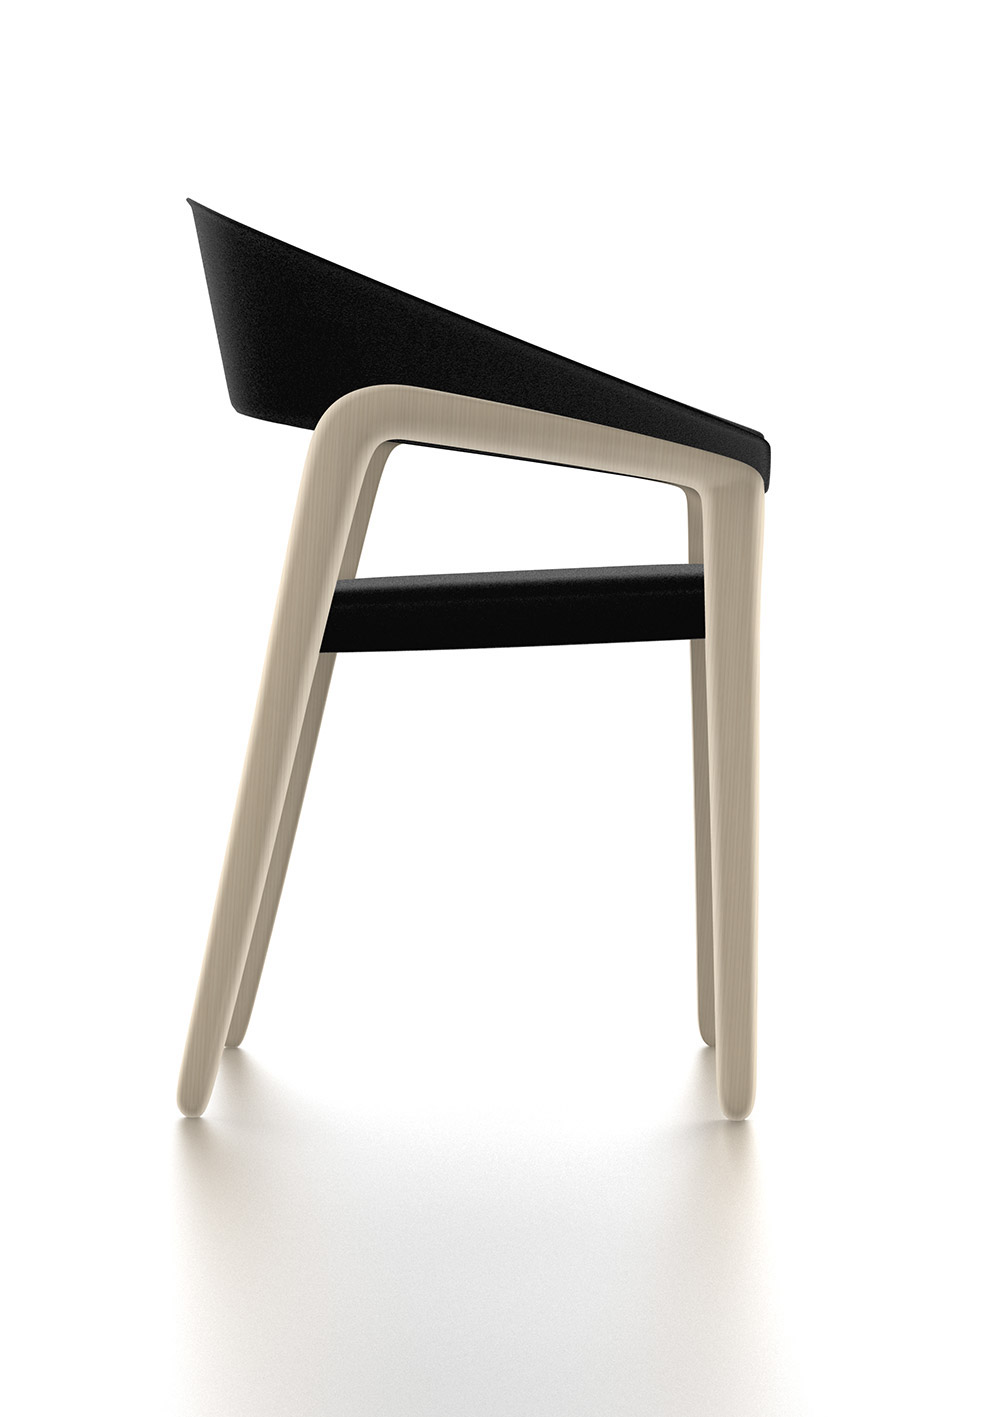 Adobe Portfolio Memory potocco Rodrigo Torres design salone del mobile chair wood leather